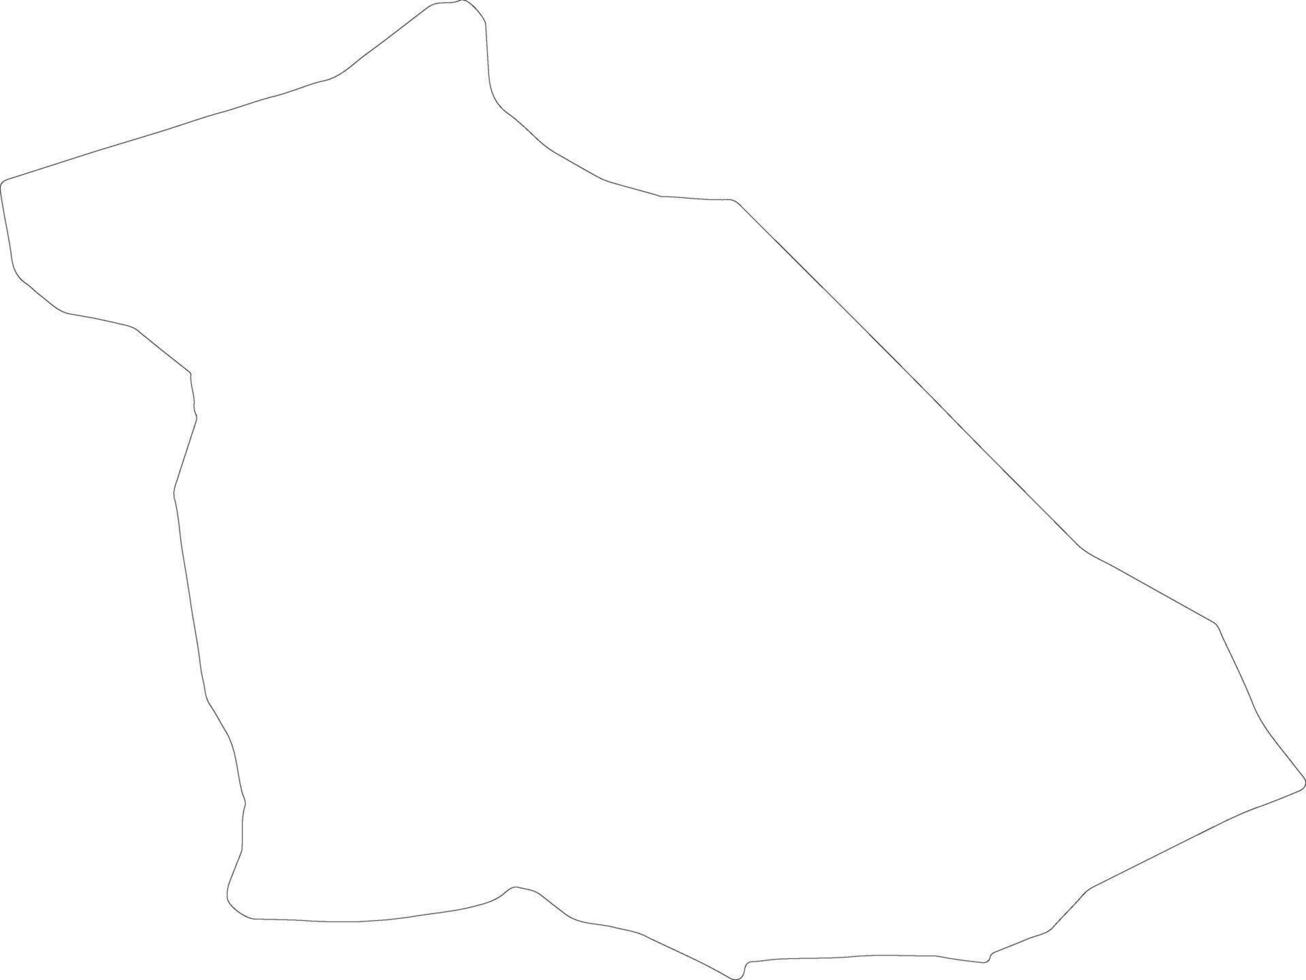 Kriva Palanka Macedonia outline map vector